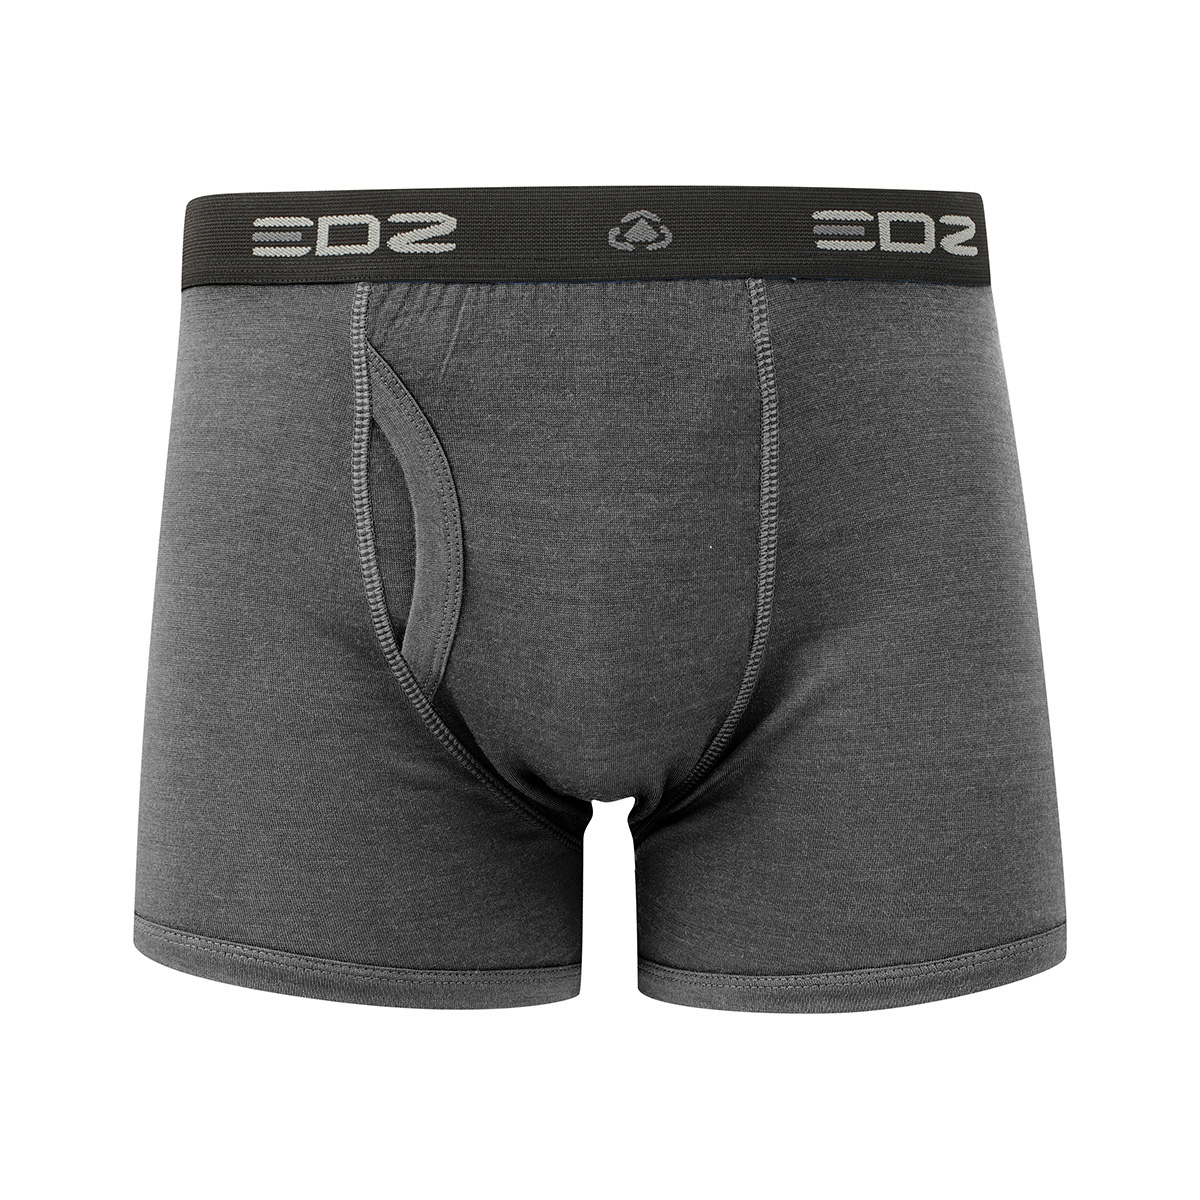 EDZ men's Merino Boxer shorts by EDZ